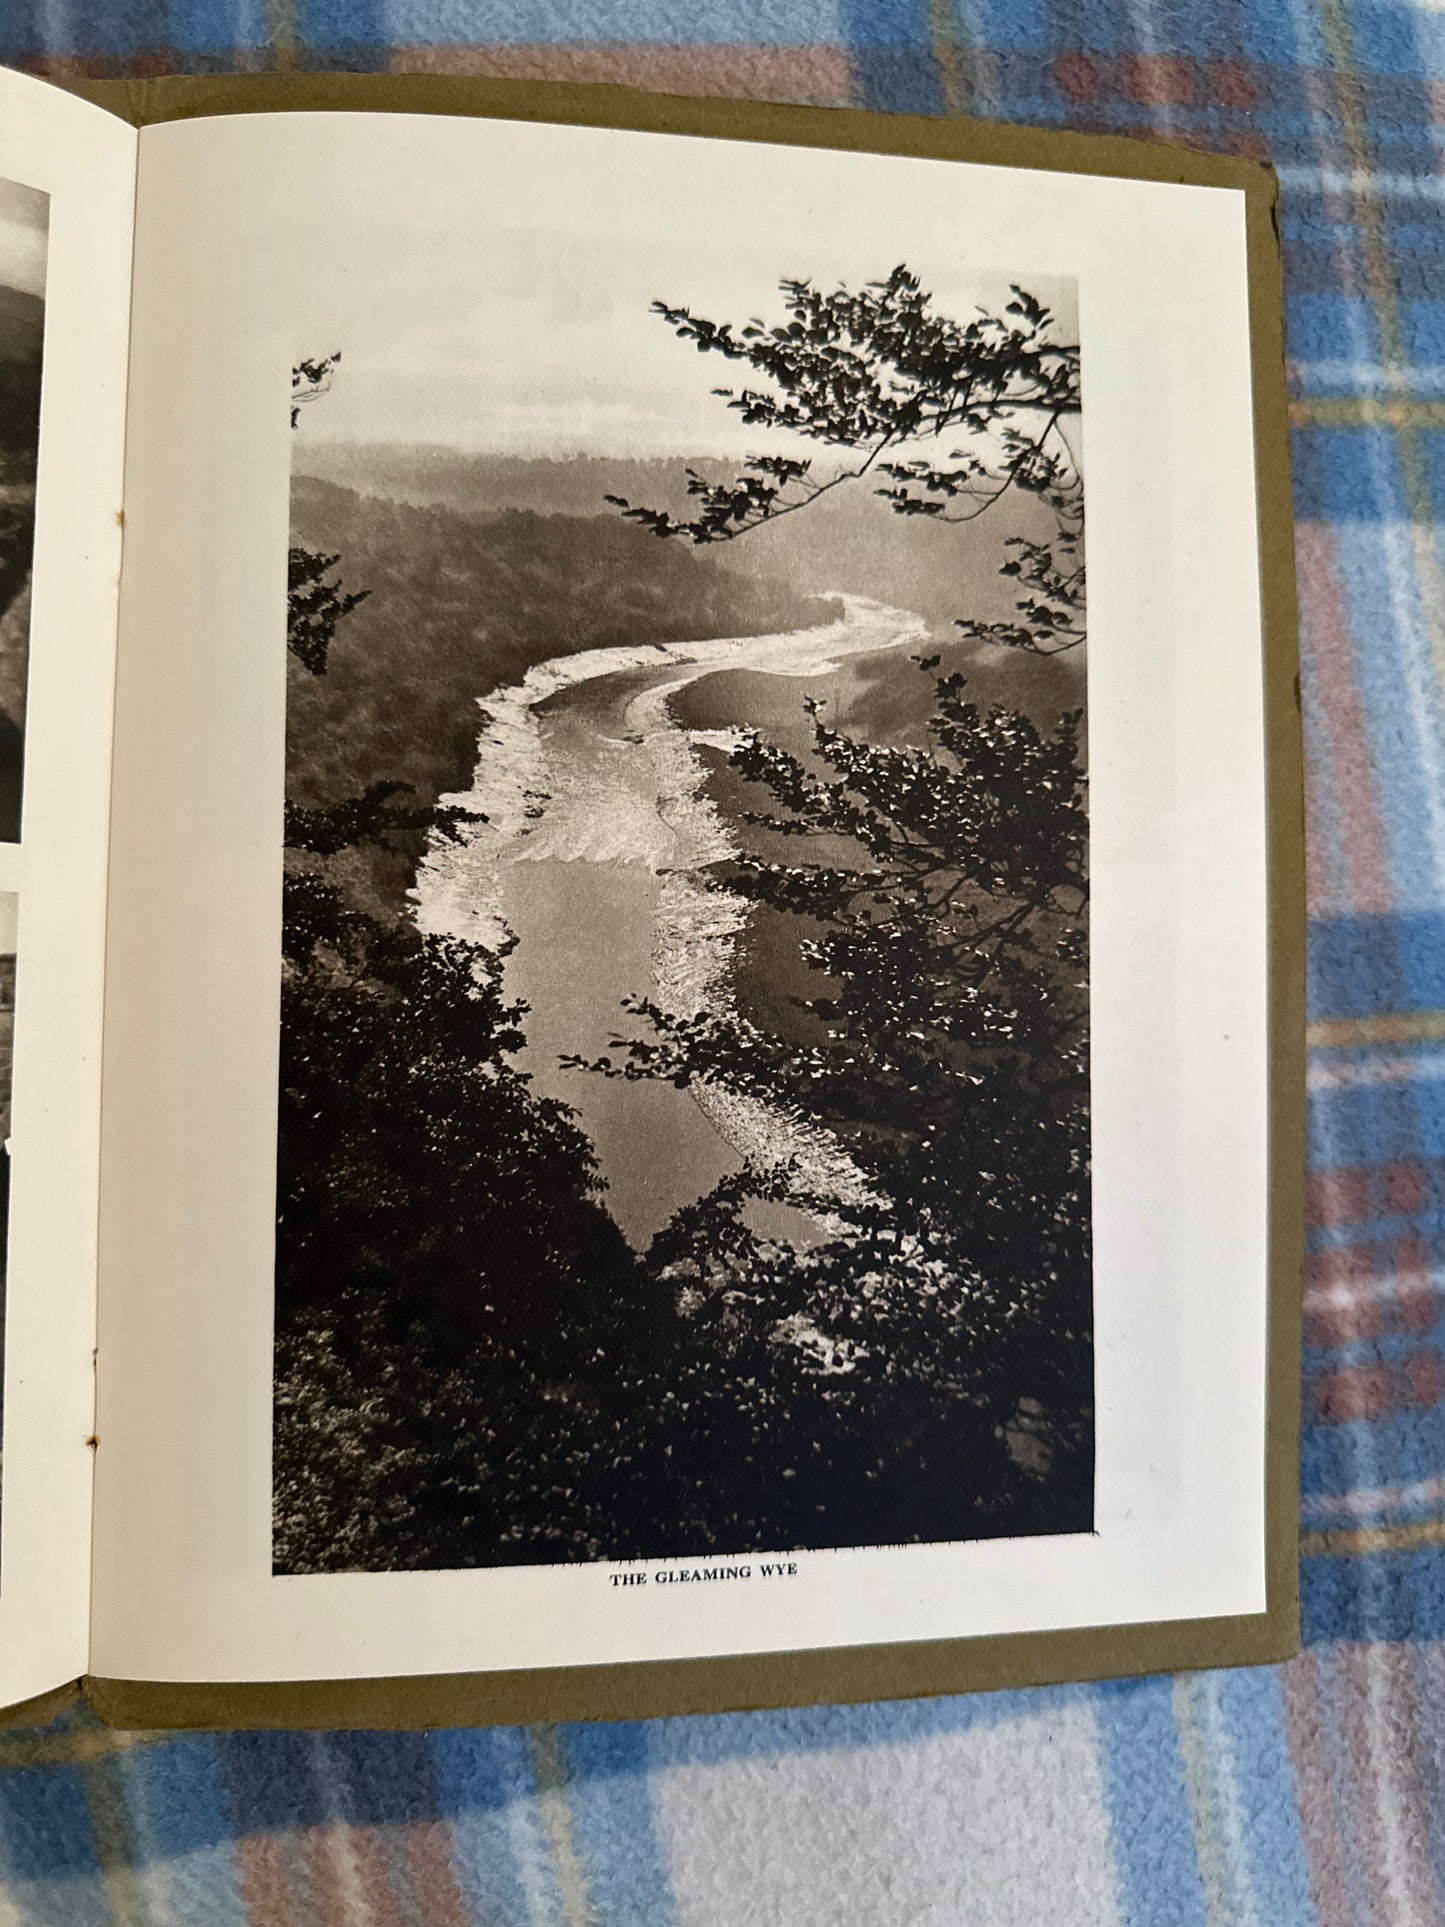 1932 Hereford & Wye Valley(The Homeland Association) - J. Dixon-Scott